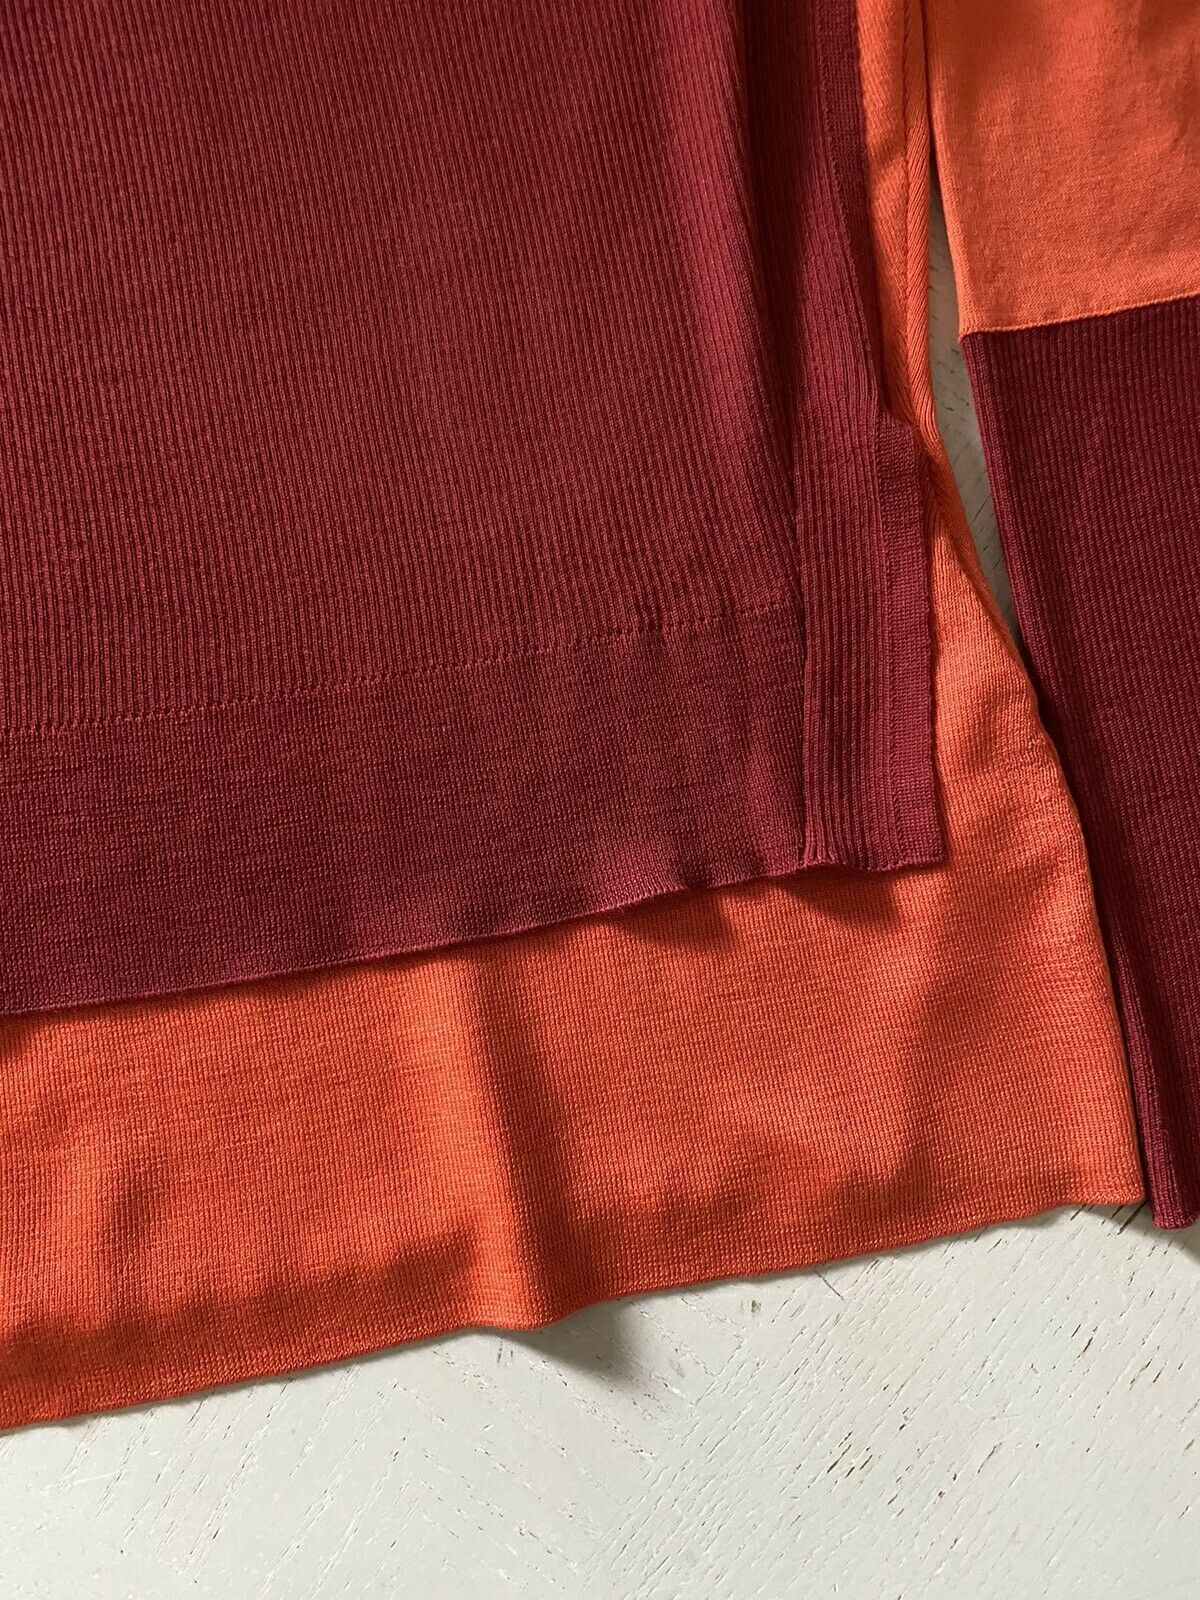 Neu $980 Alexander McQueen Damen Patchwork-Langarmpullover Rot/Orange XL Ita